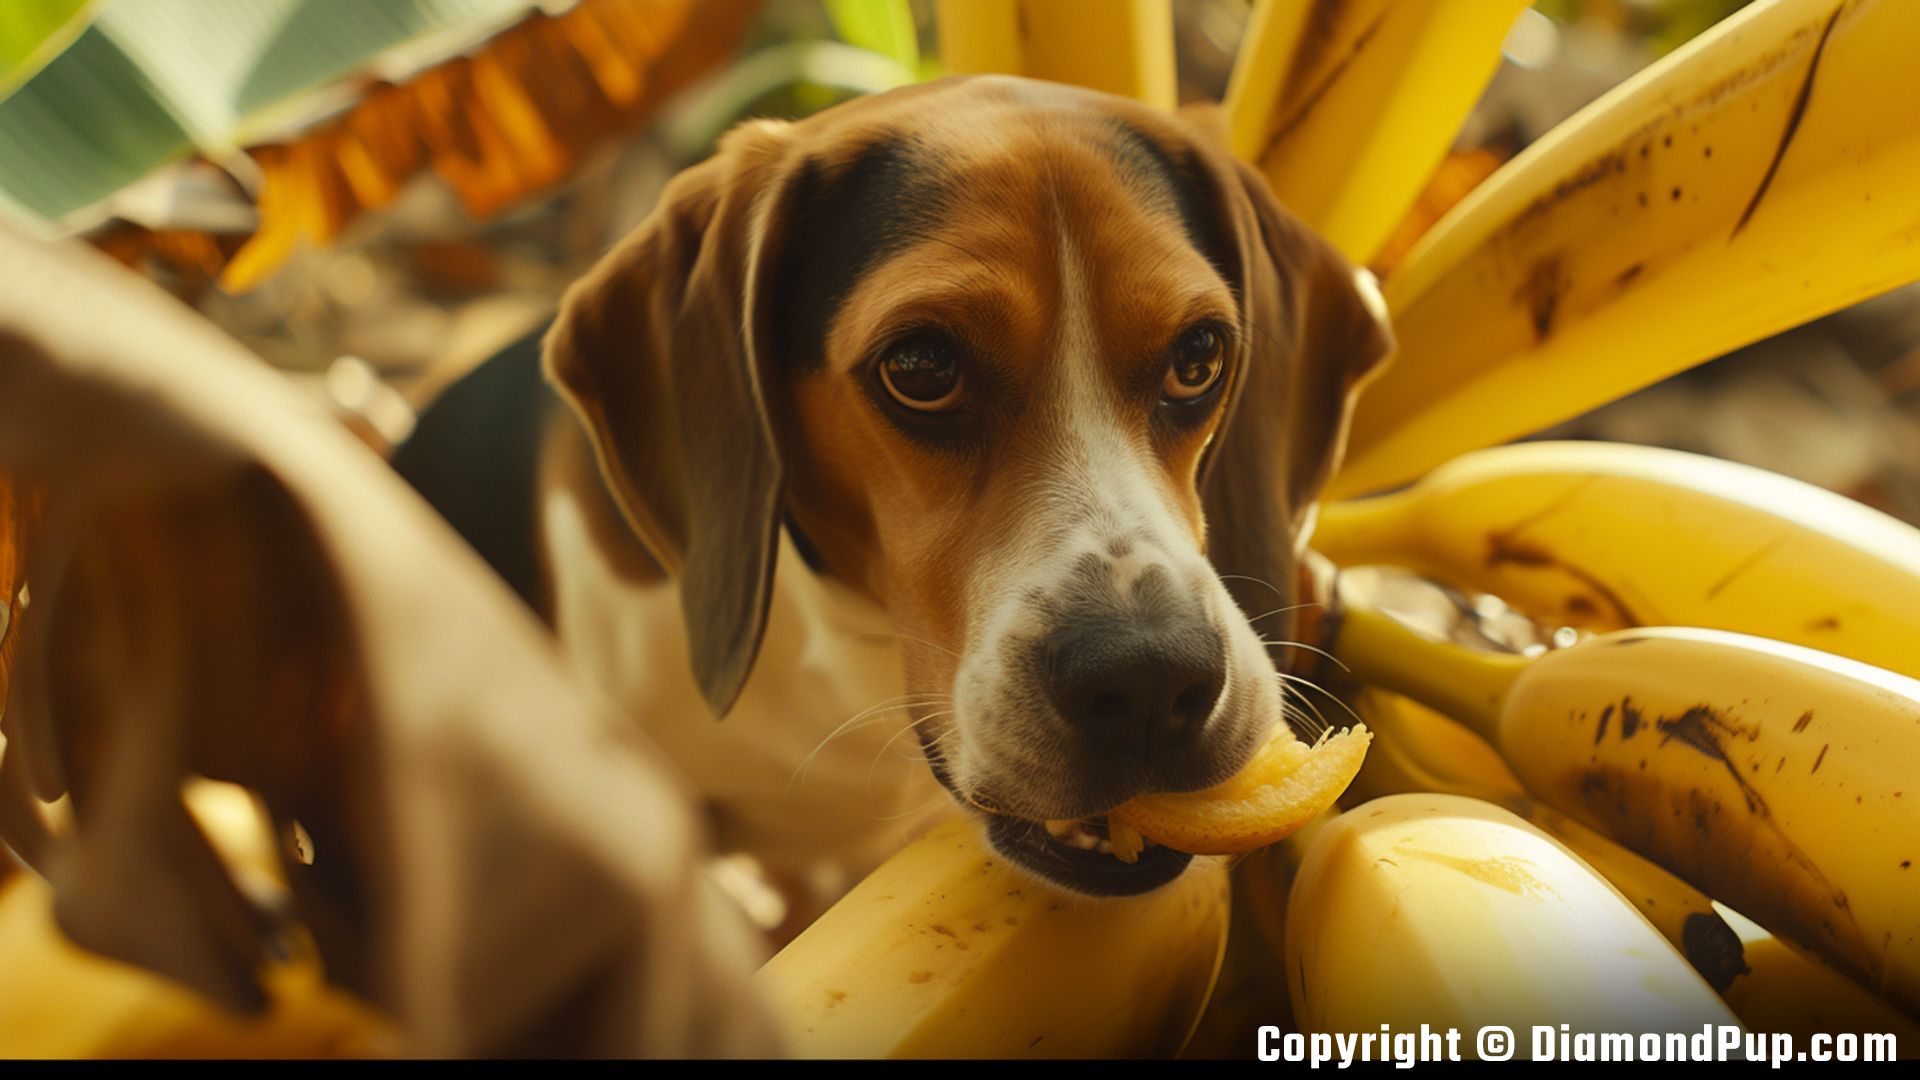 Photo of a Cute Beagle Snacking on Banana